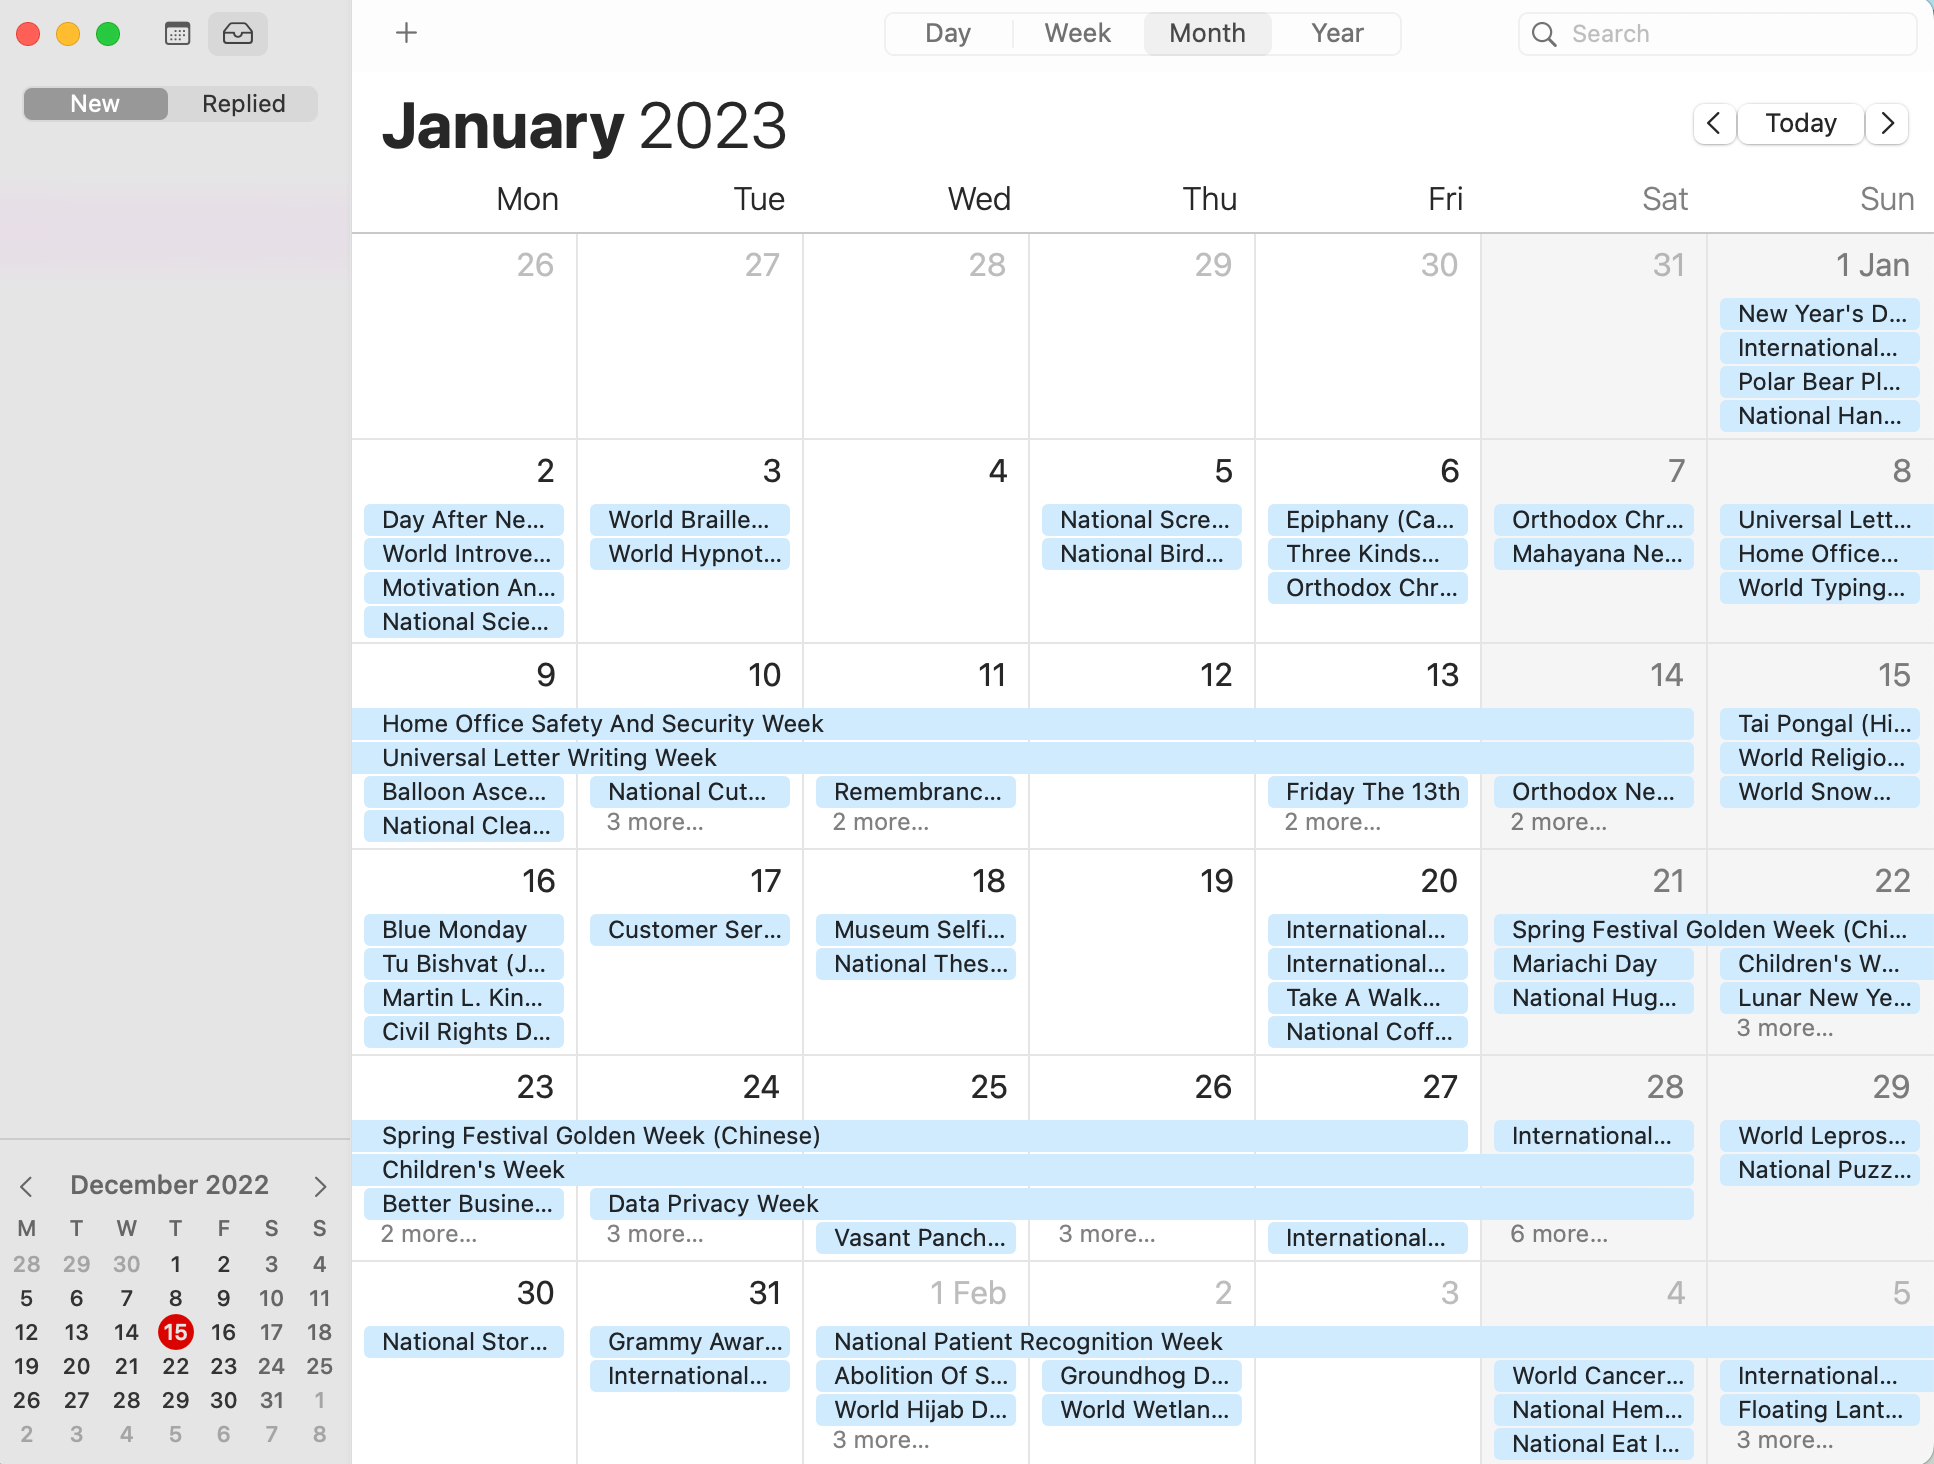 Holiday marketing calendar presented in MacOS built-in calendar tool